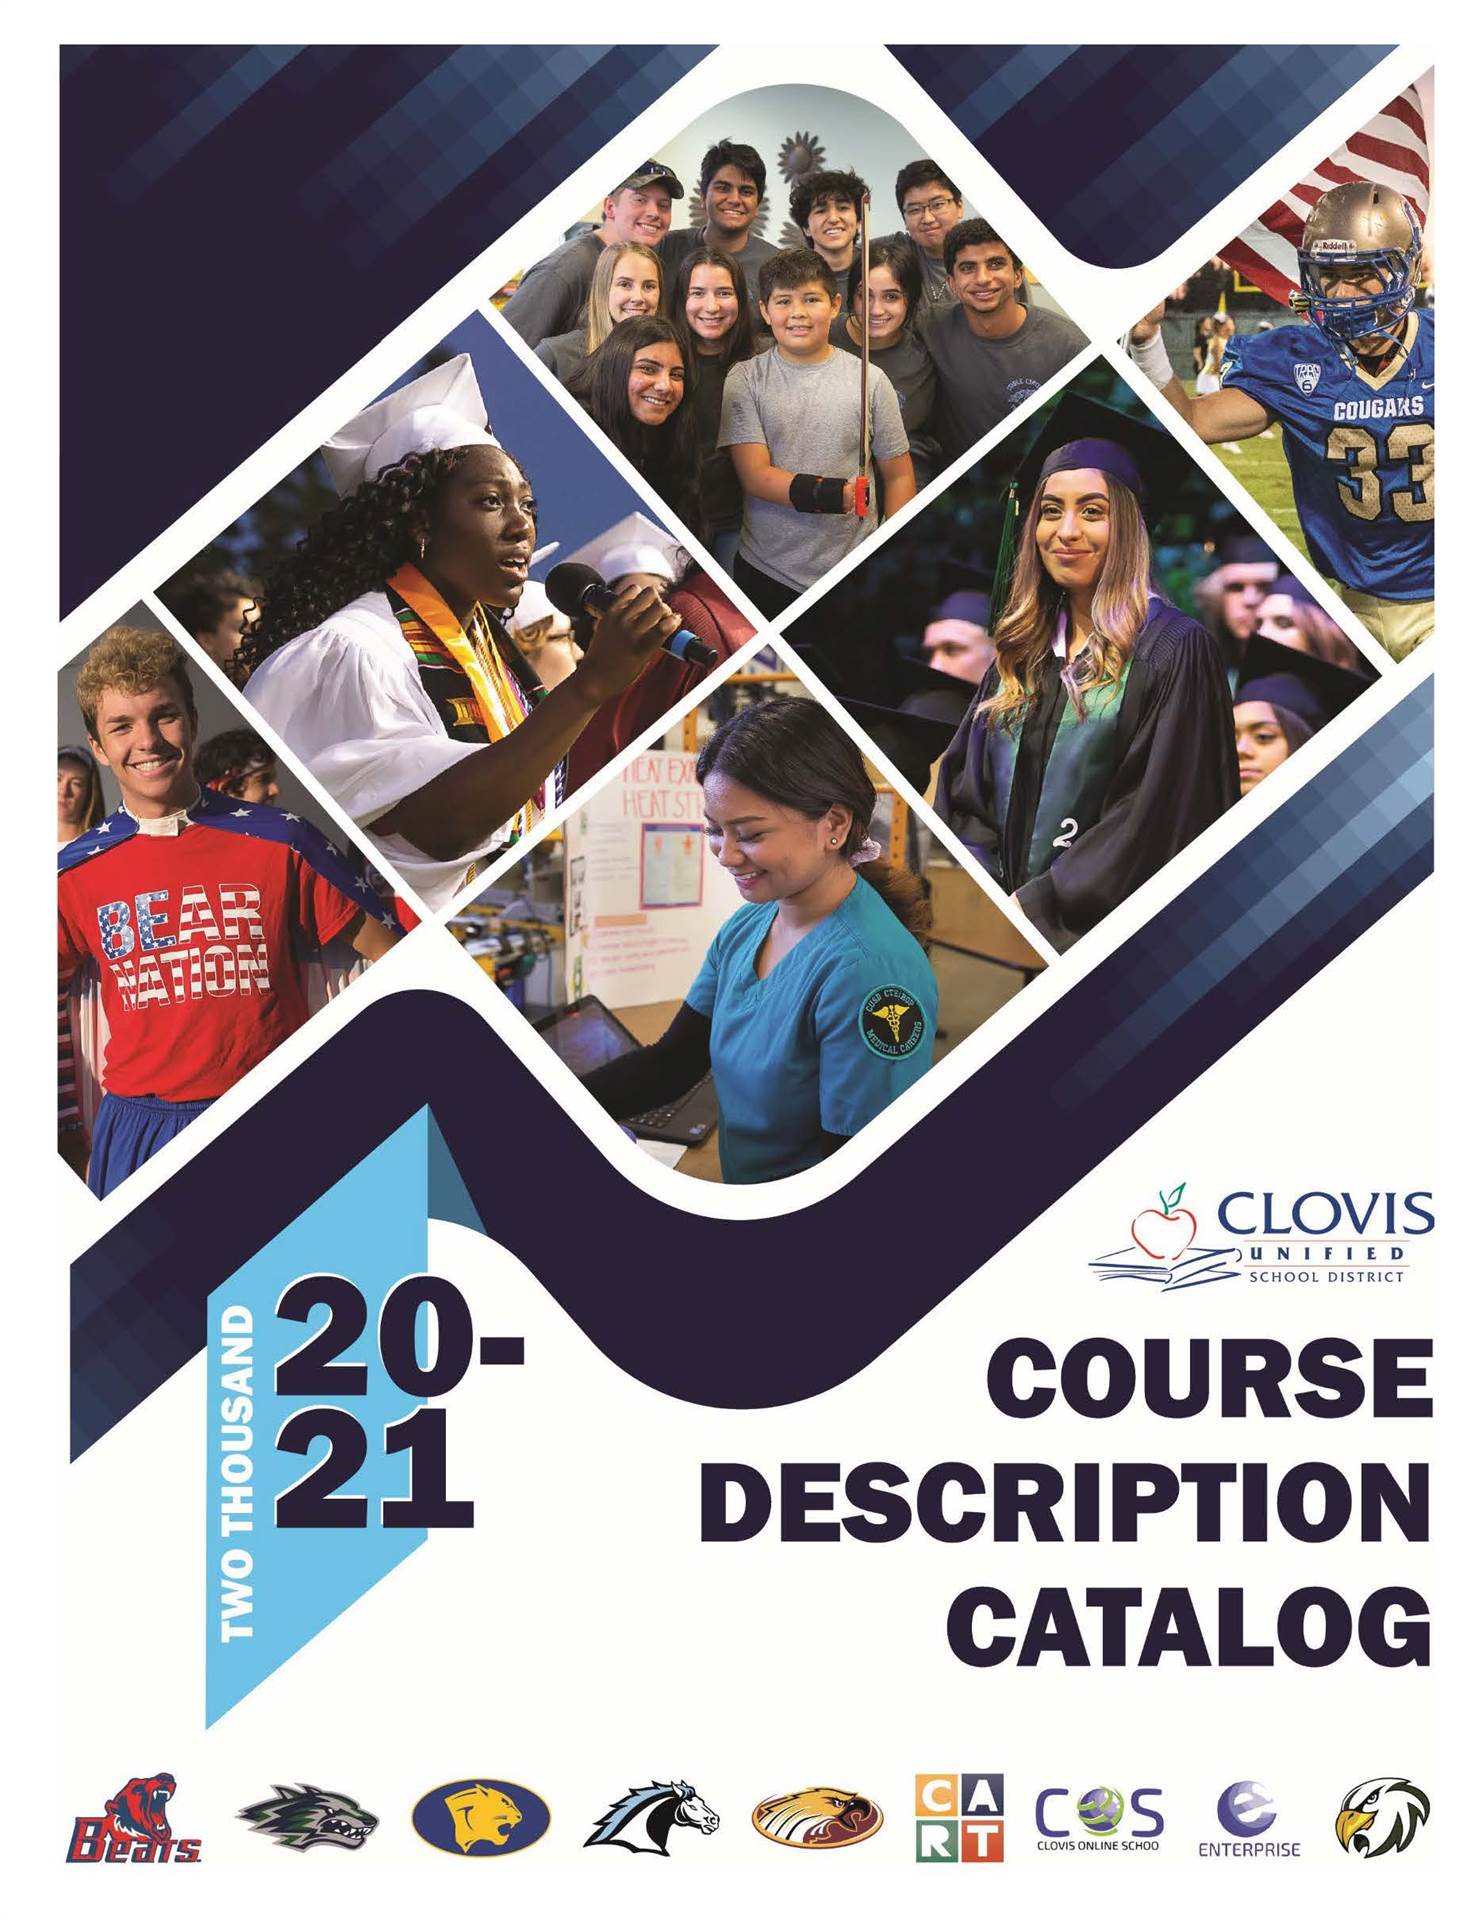 2020-2021 Course Description Catalog